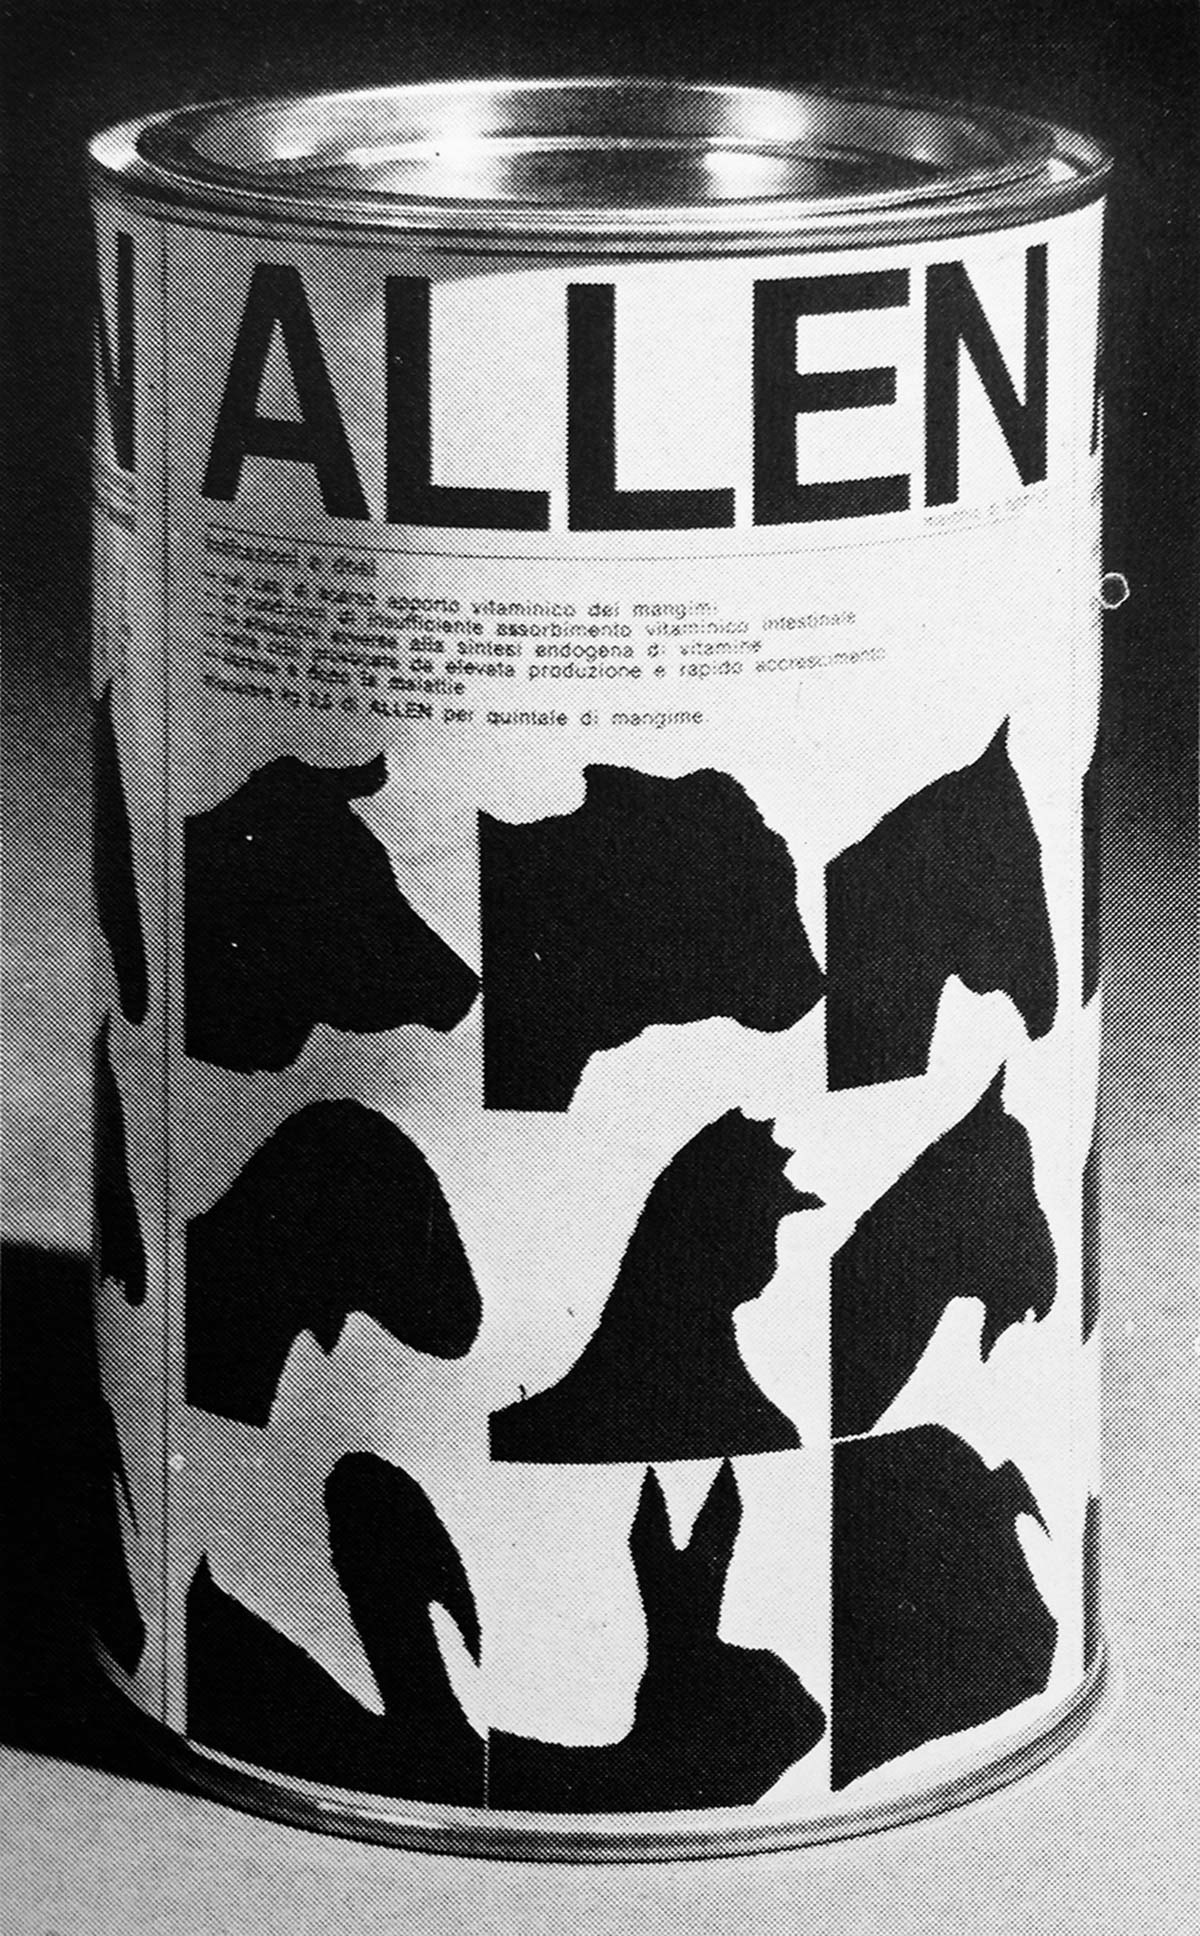 Allen label for animal feed tin by Armando Milani, 1972